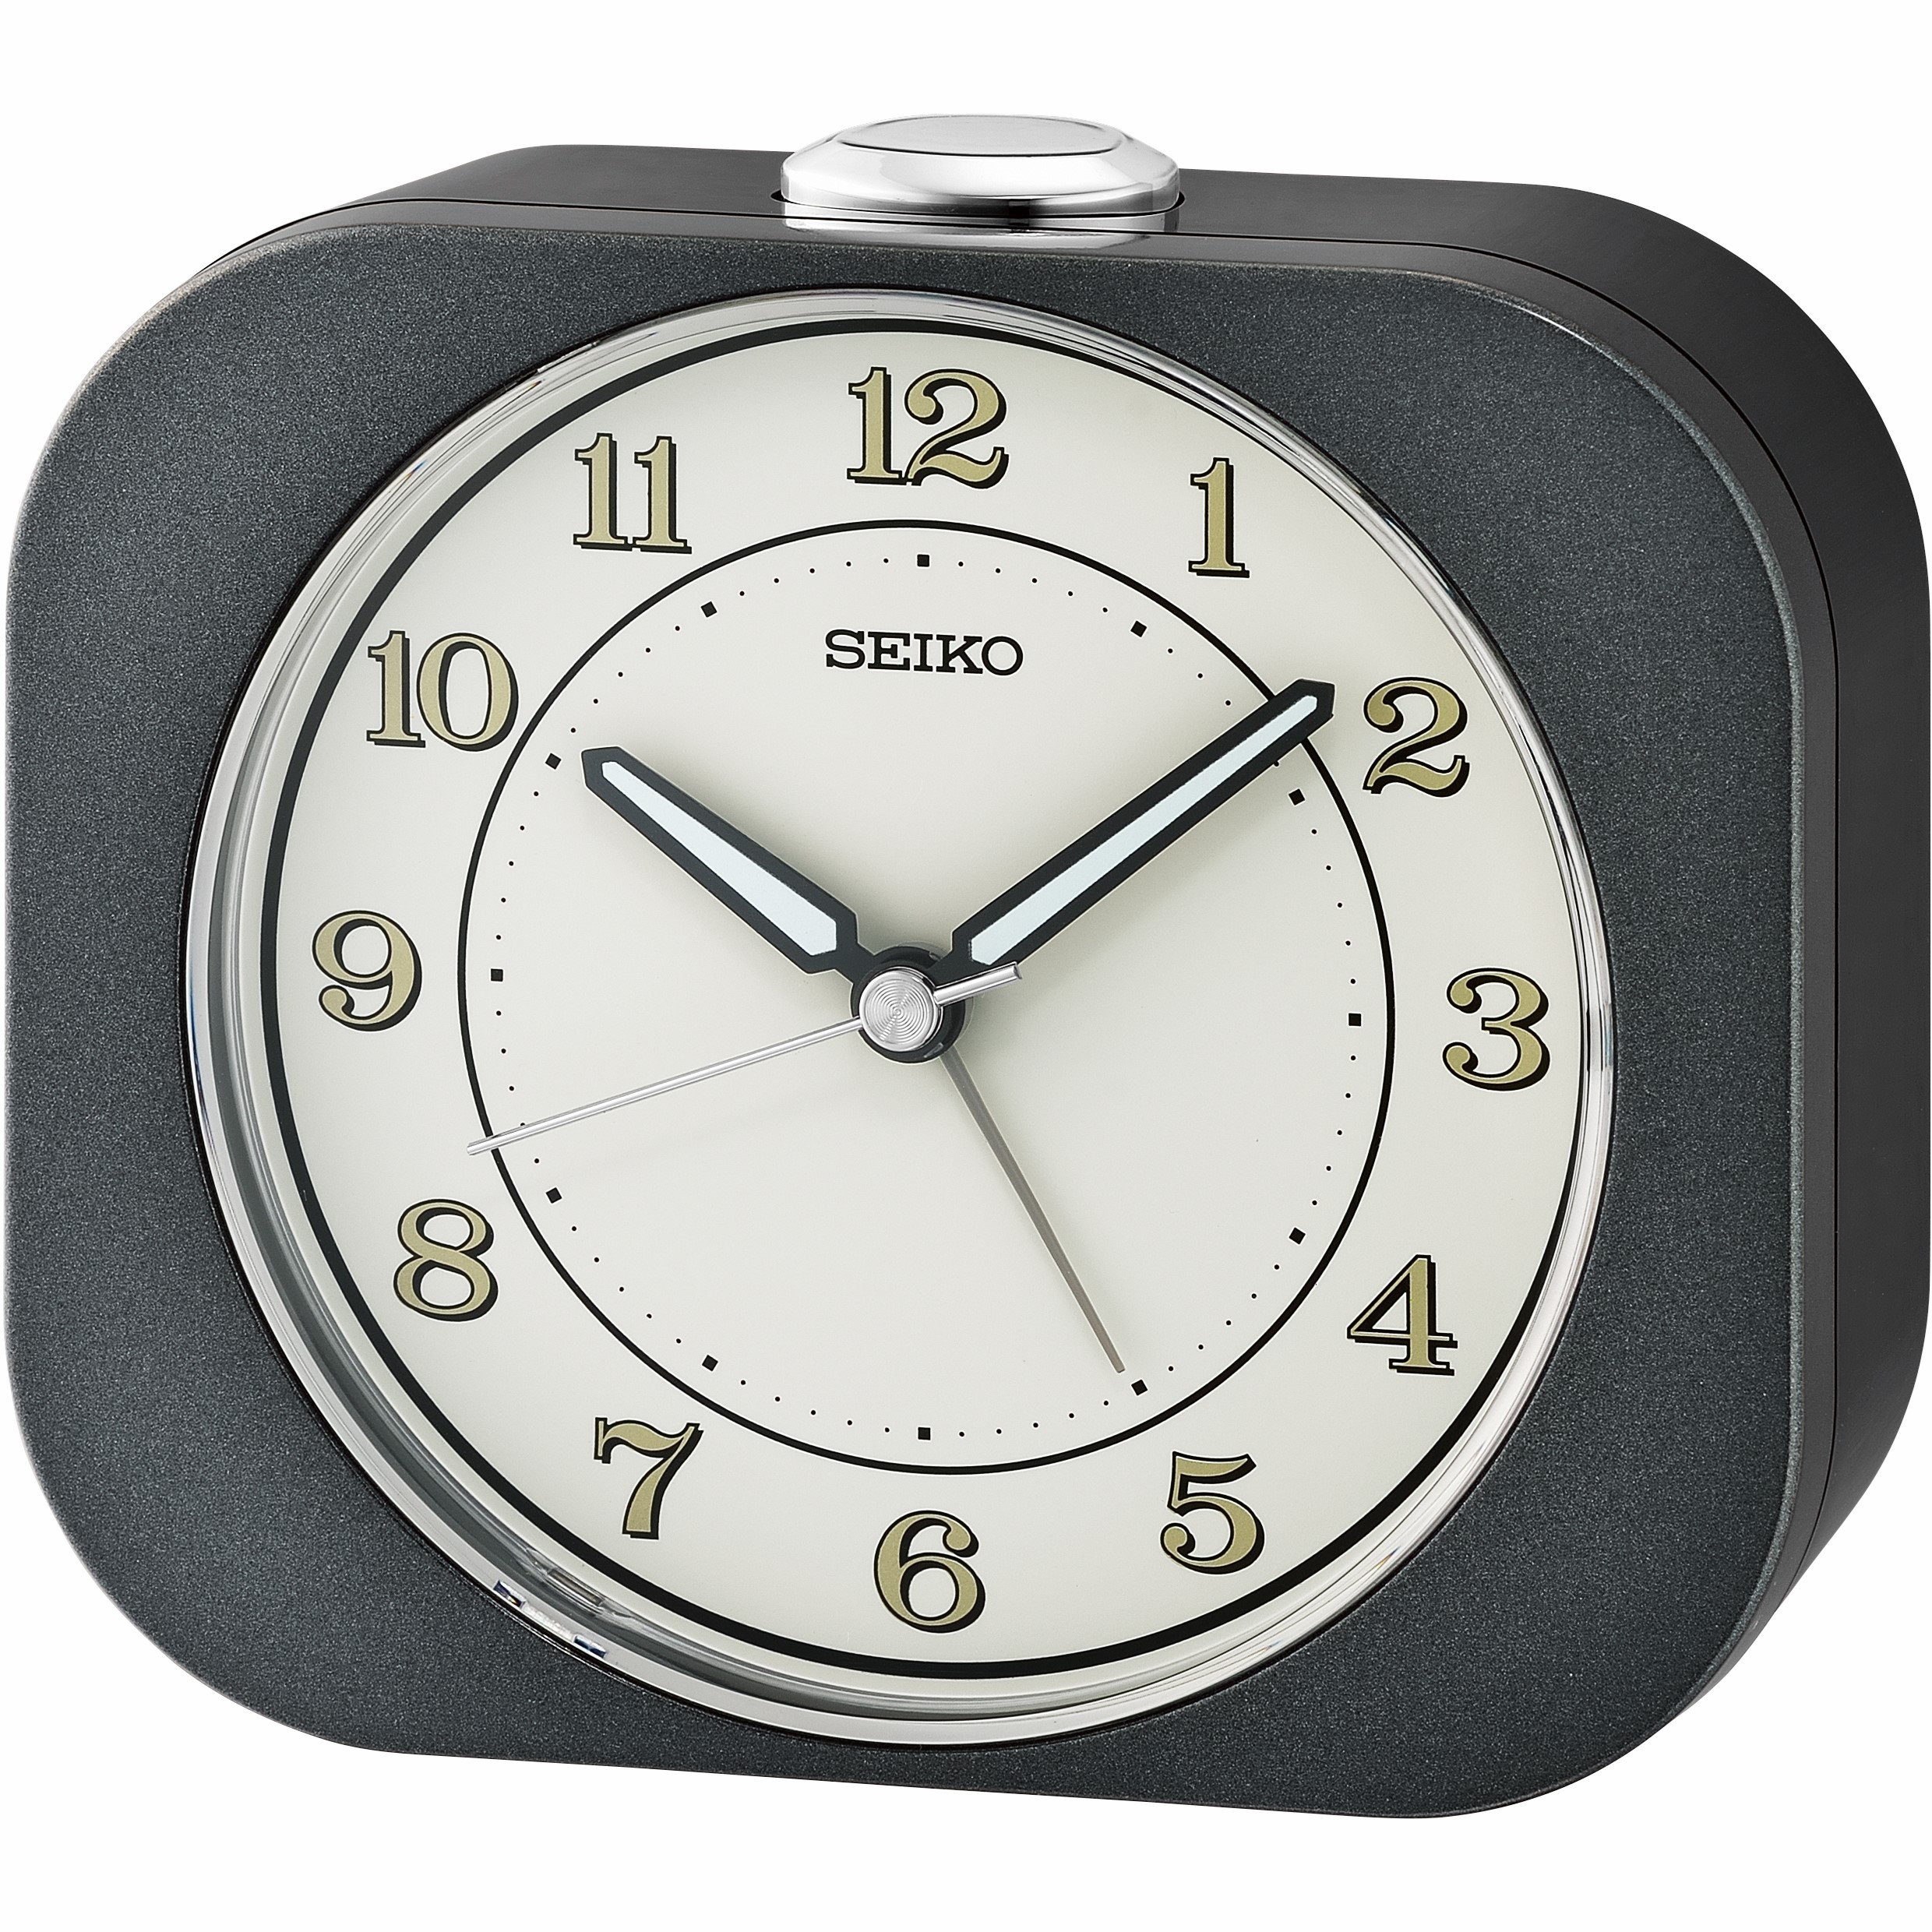 Seiko Analog Quartz Tabletop Clock with Alarm & Reviews | Wayfair